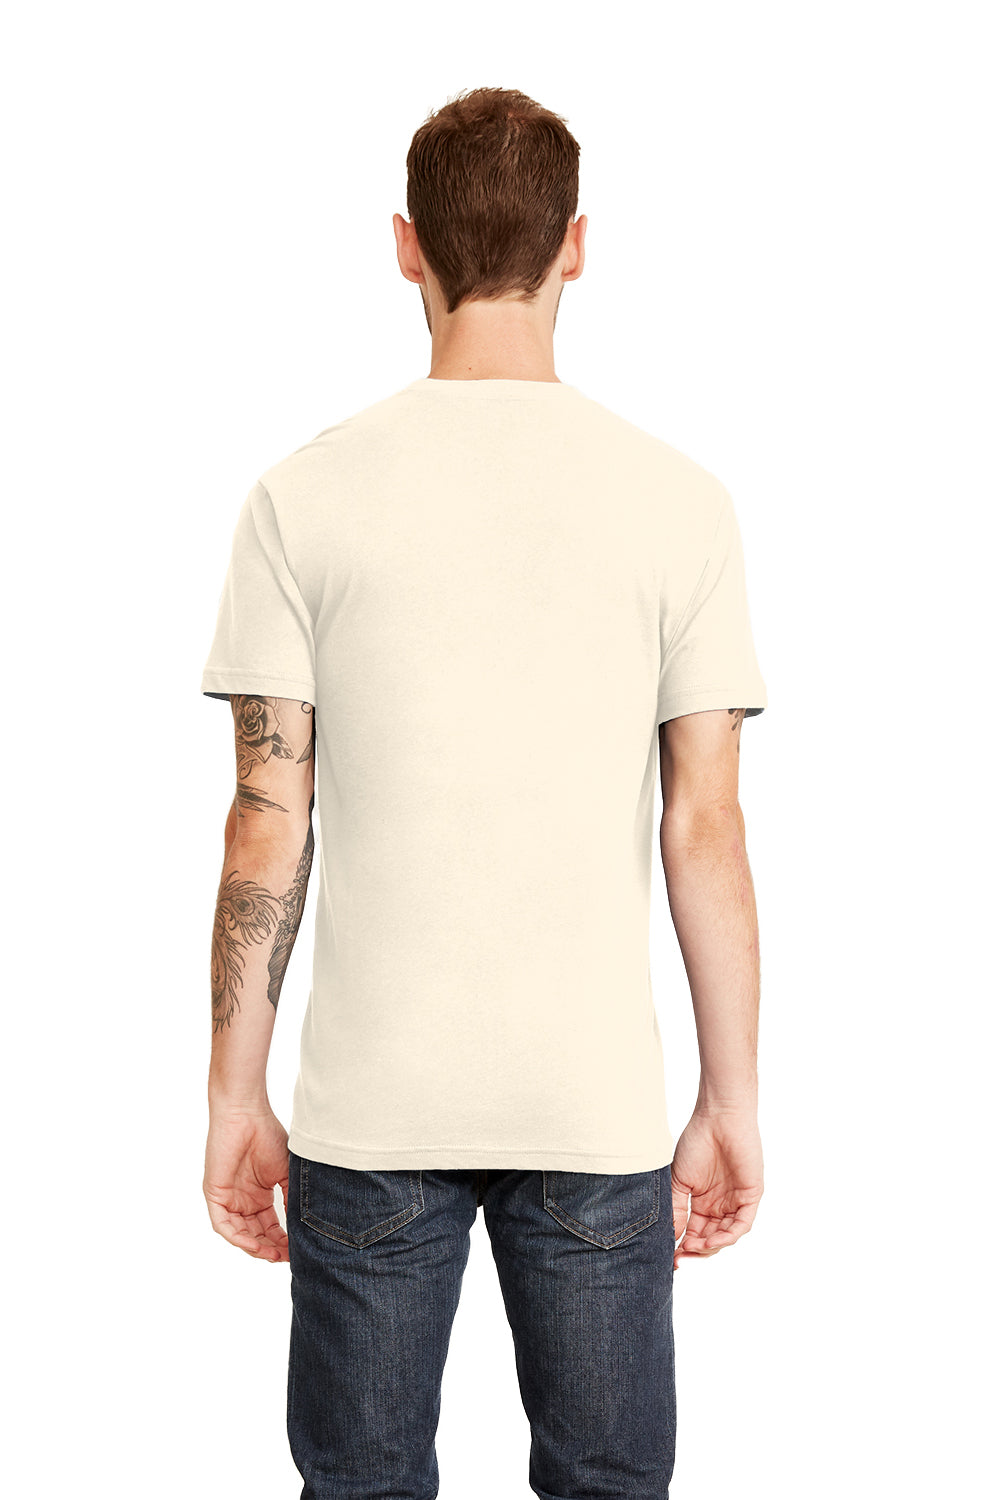 Next Level 3605 Mens Fine Jersey Short Sleeve Crewneck T-Shirt w/ Pocket Natural Back